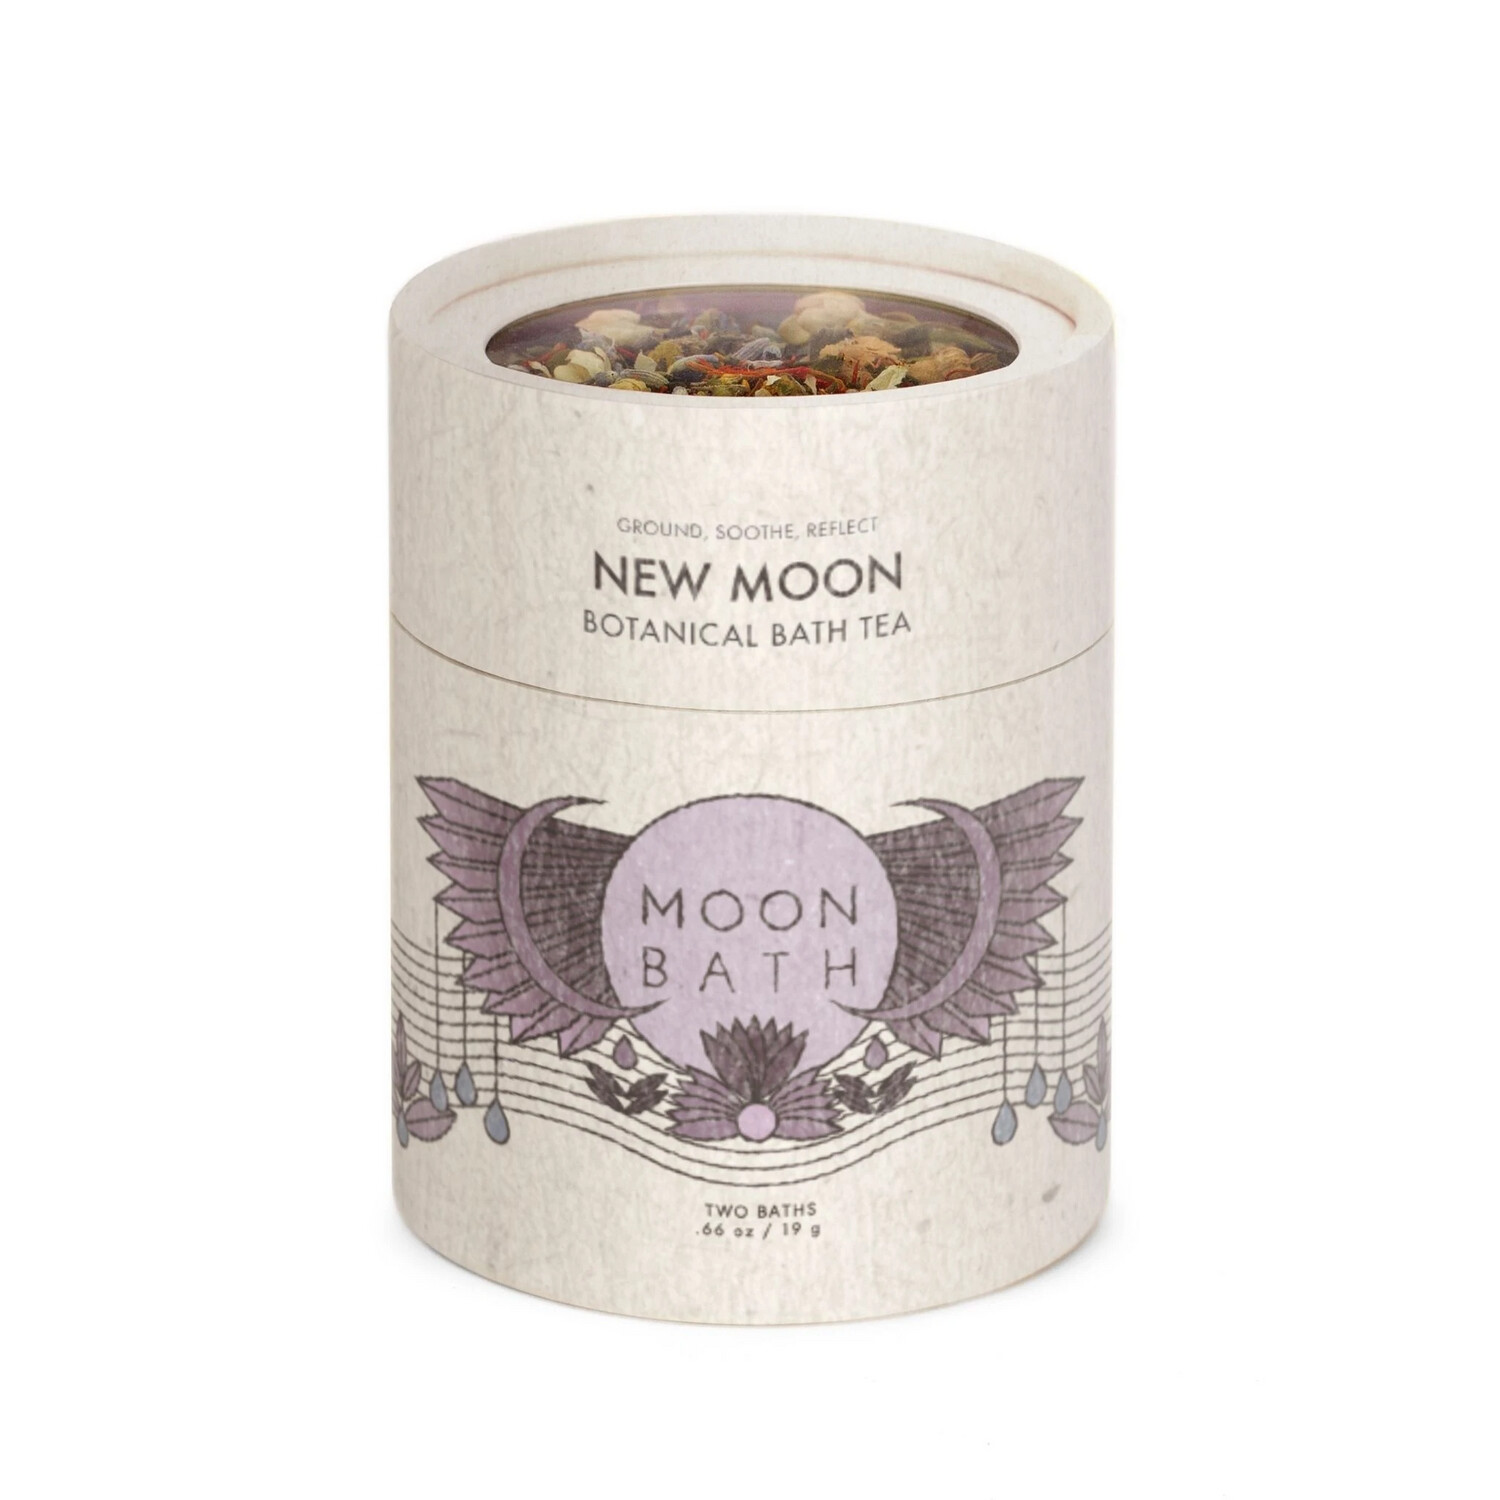 Moon Bath - New Moon Botanical Bath Tea